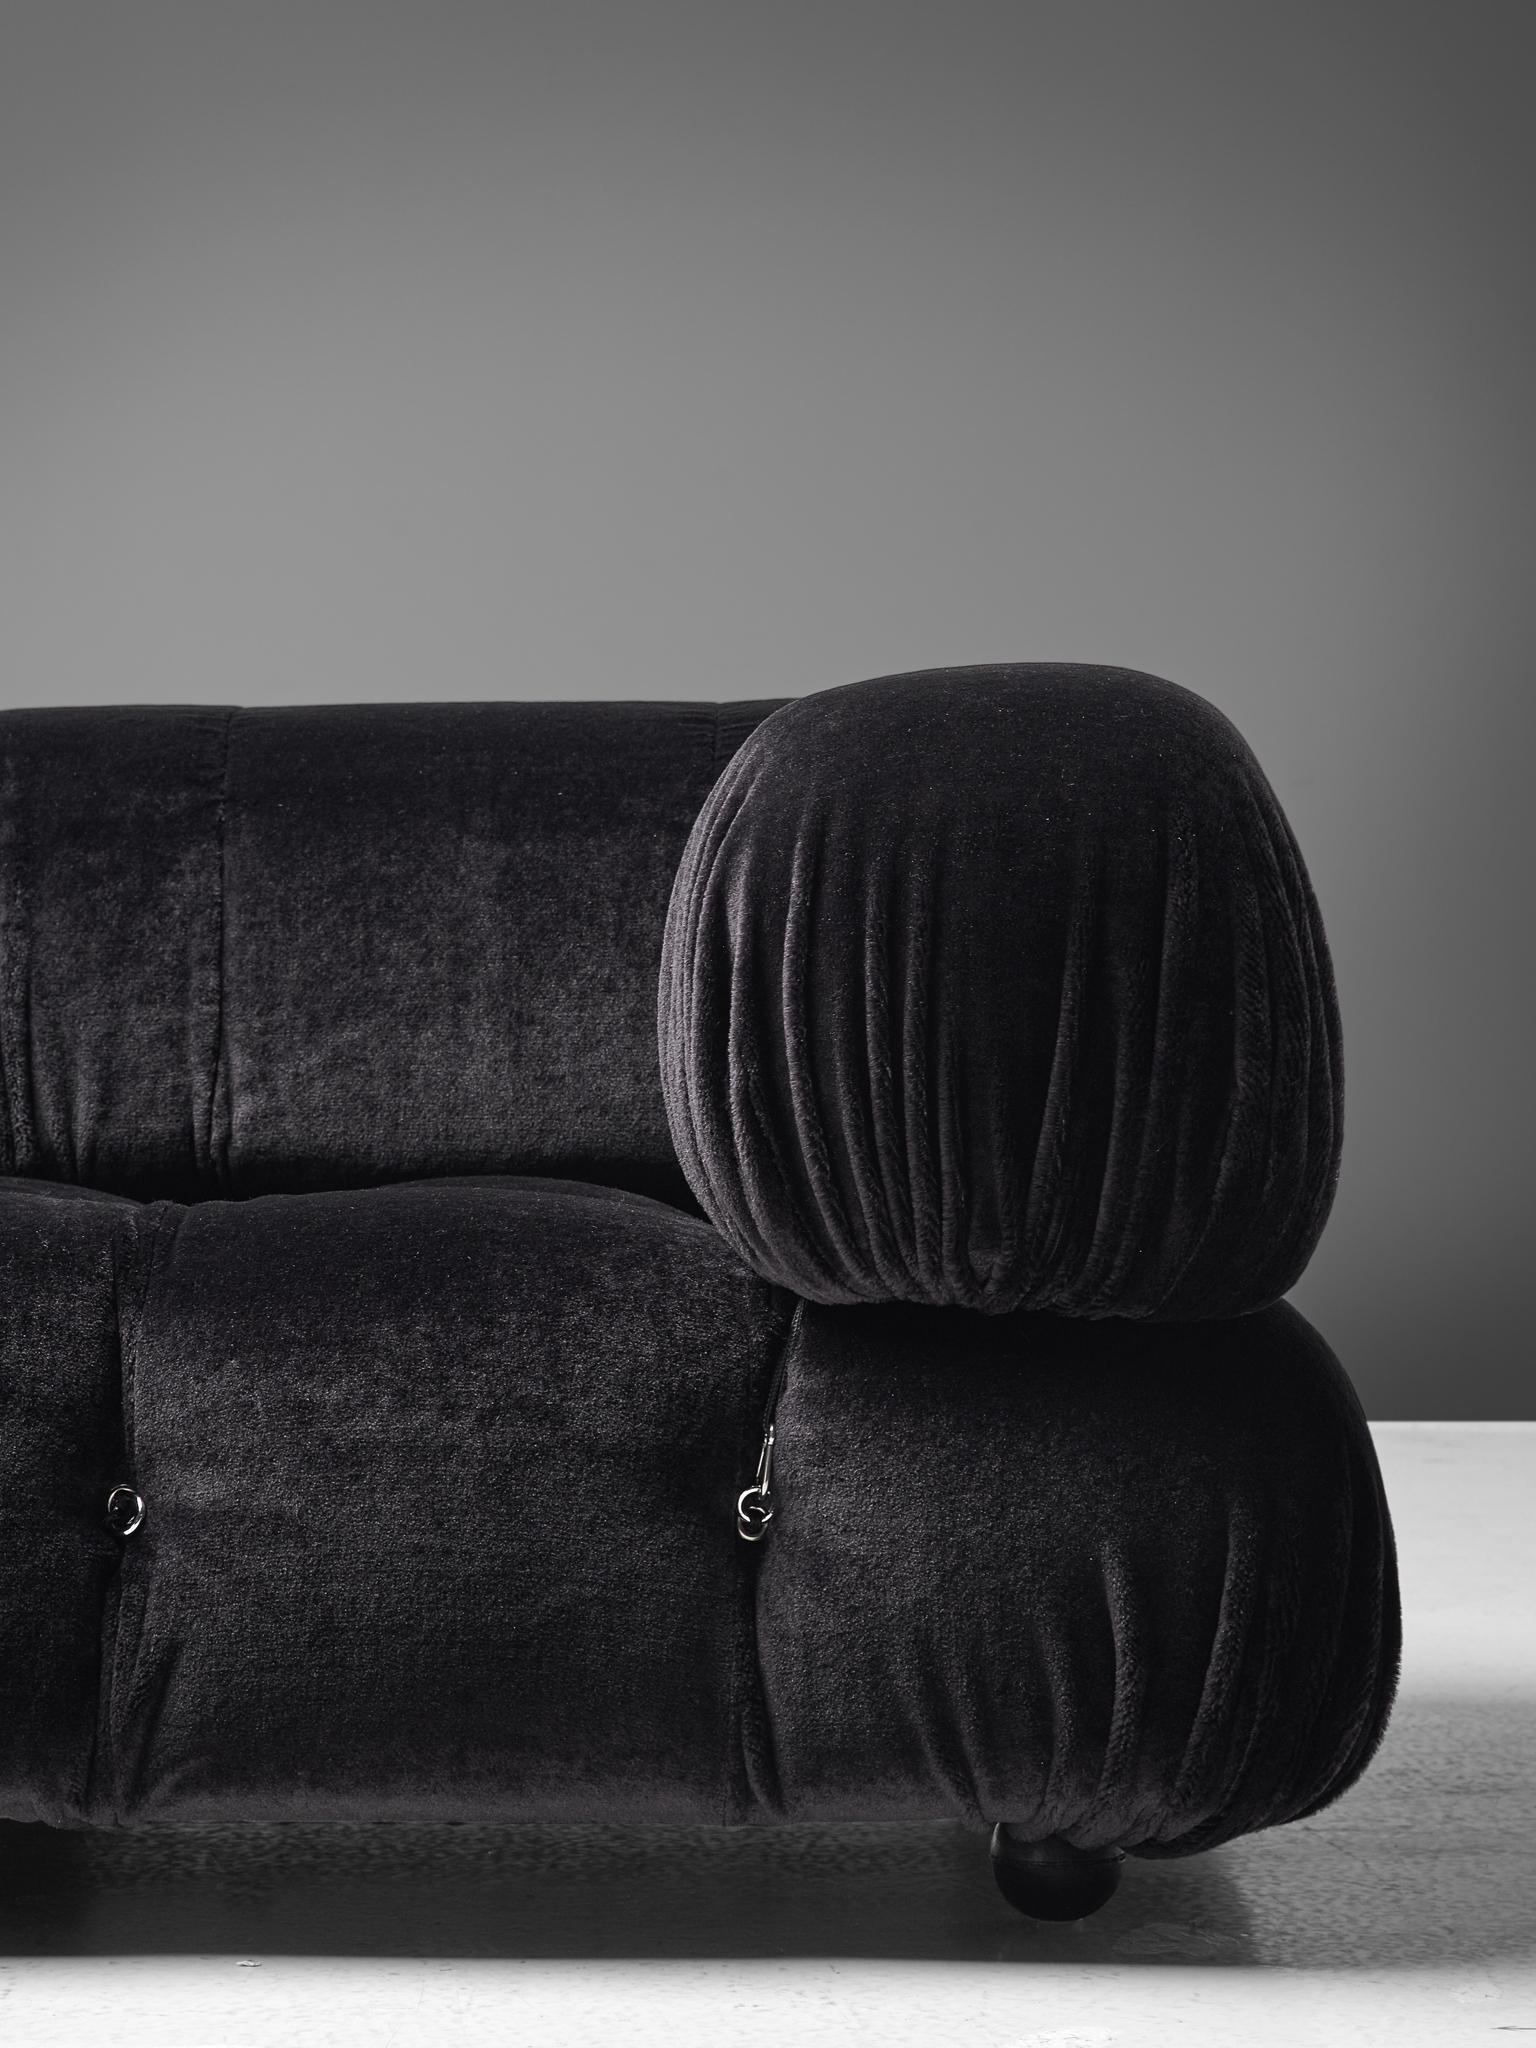 Mario Bellini 'Camaleonda' Modular Sofa Reupholstered in Antracite Upholstery 2